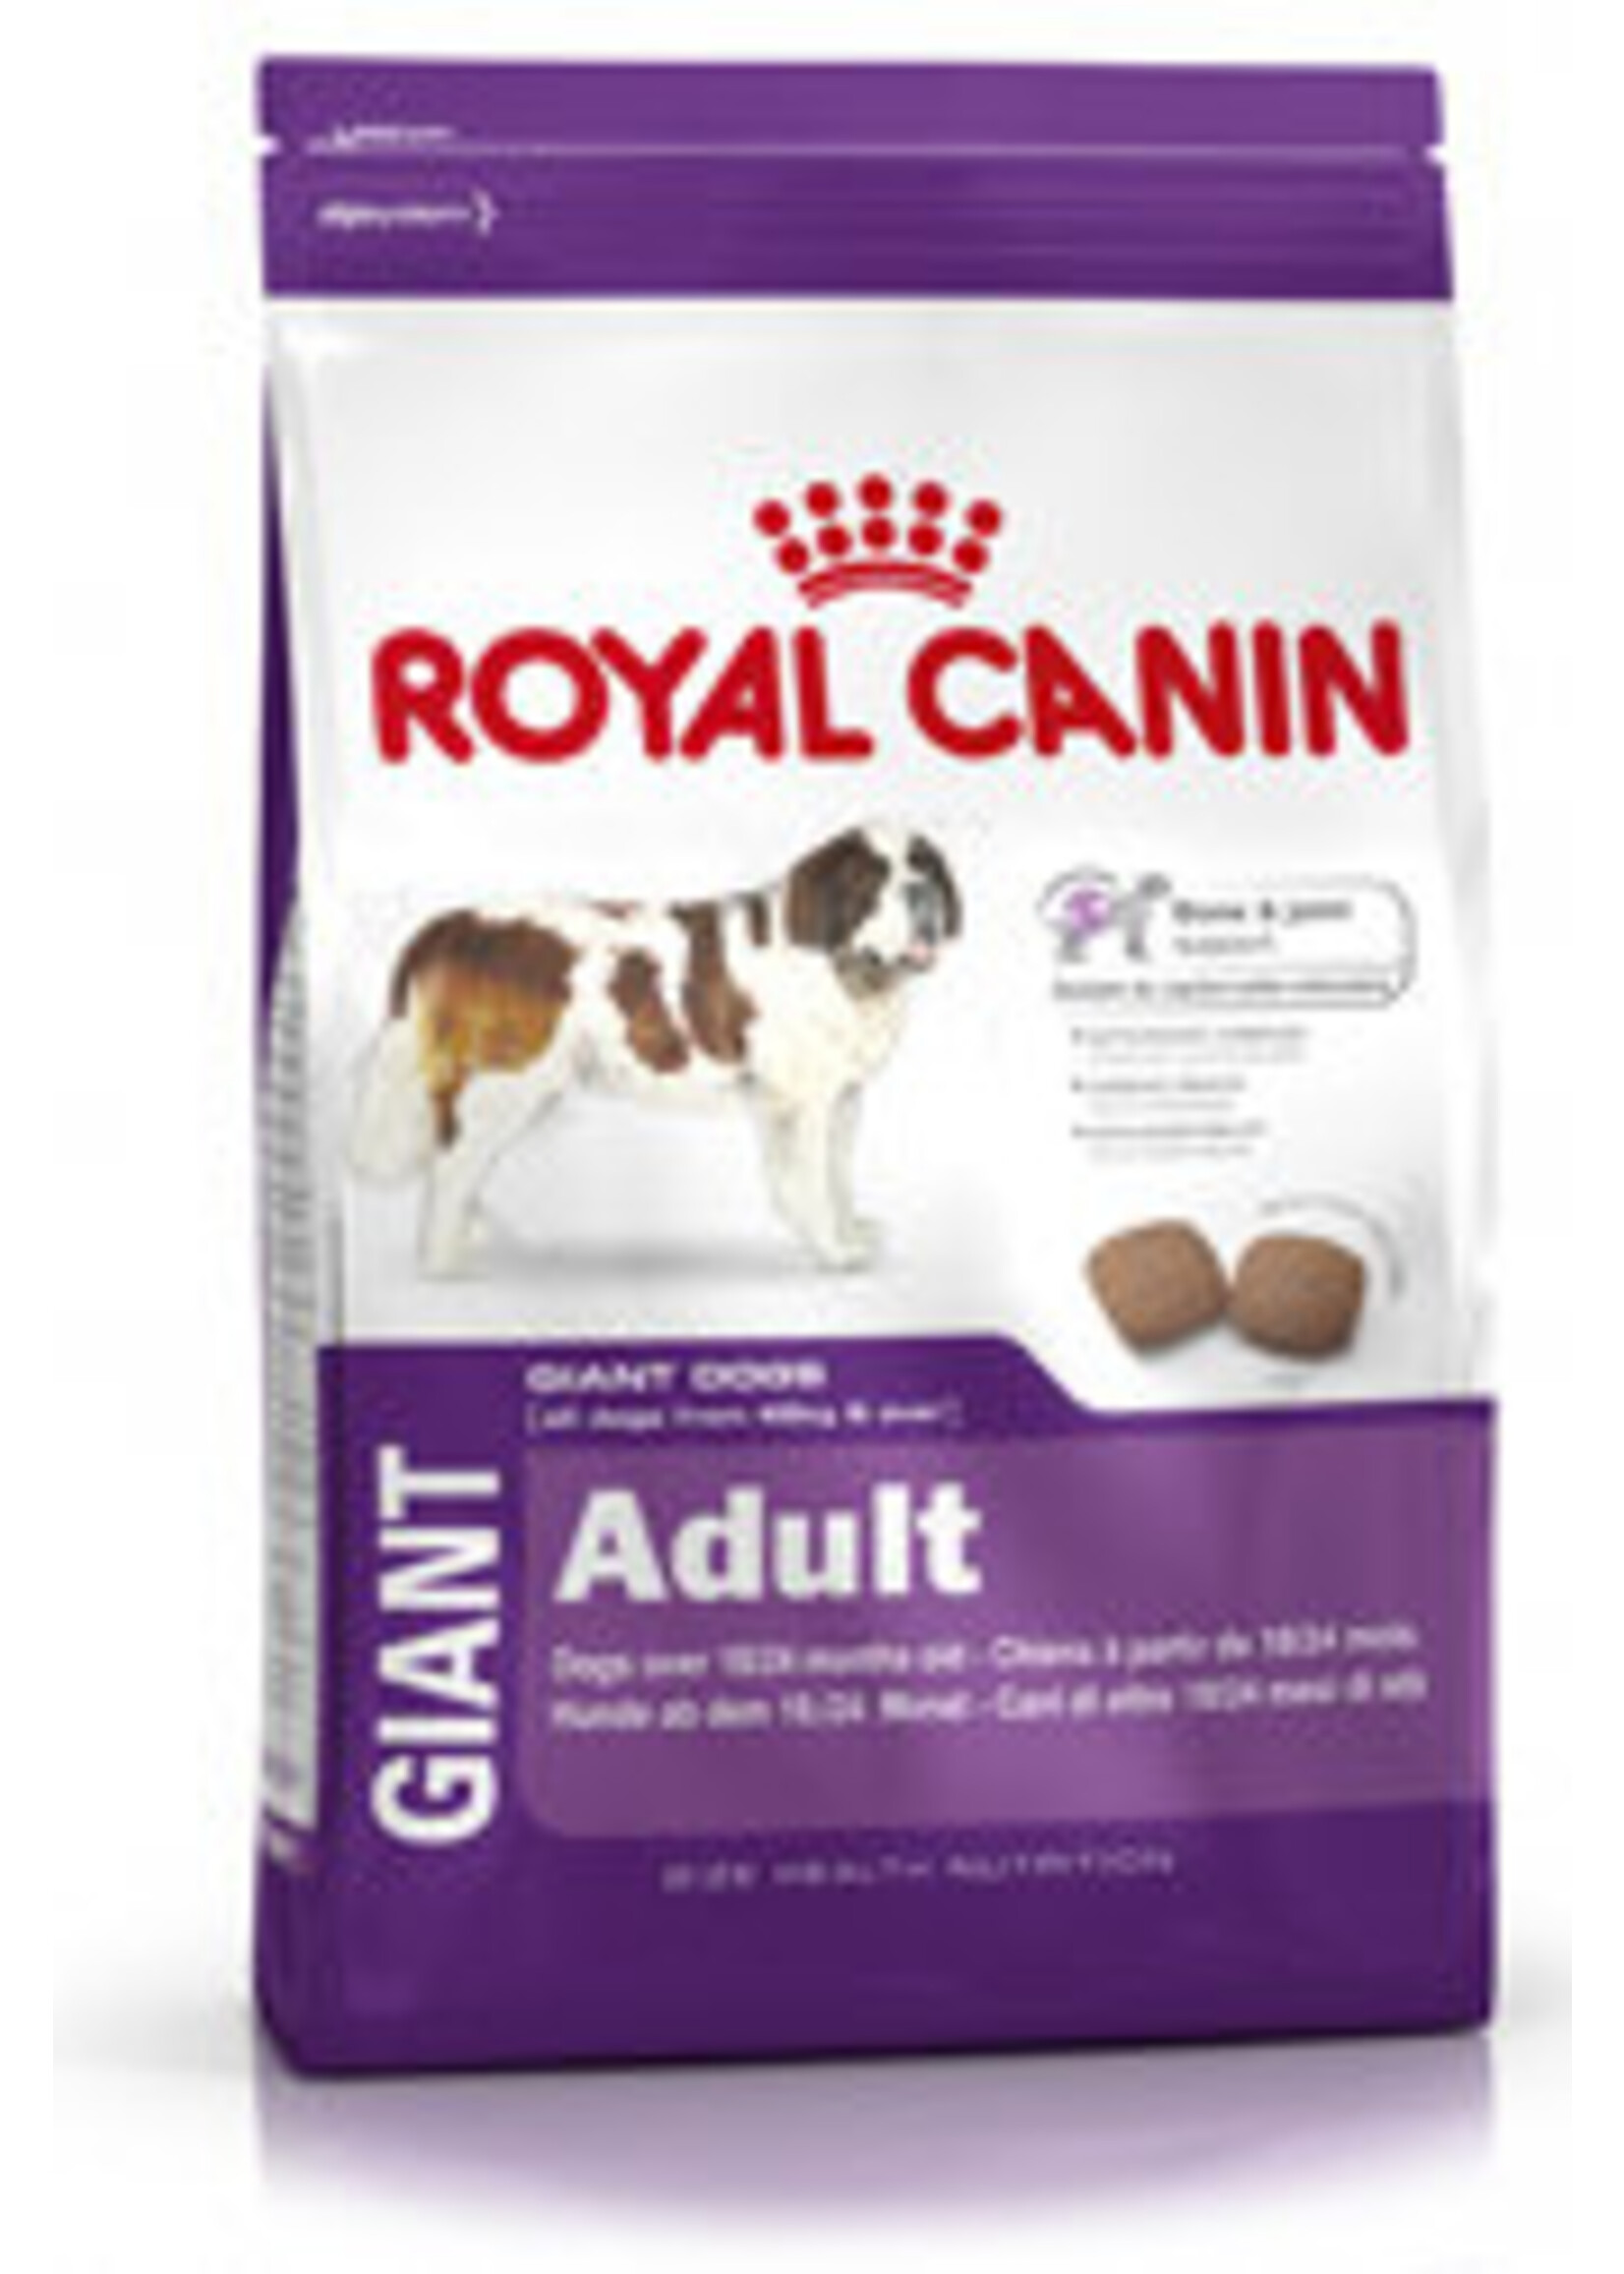 Royal Canin Royal Canin Shn Giant Adult Hond 15kg